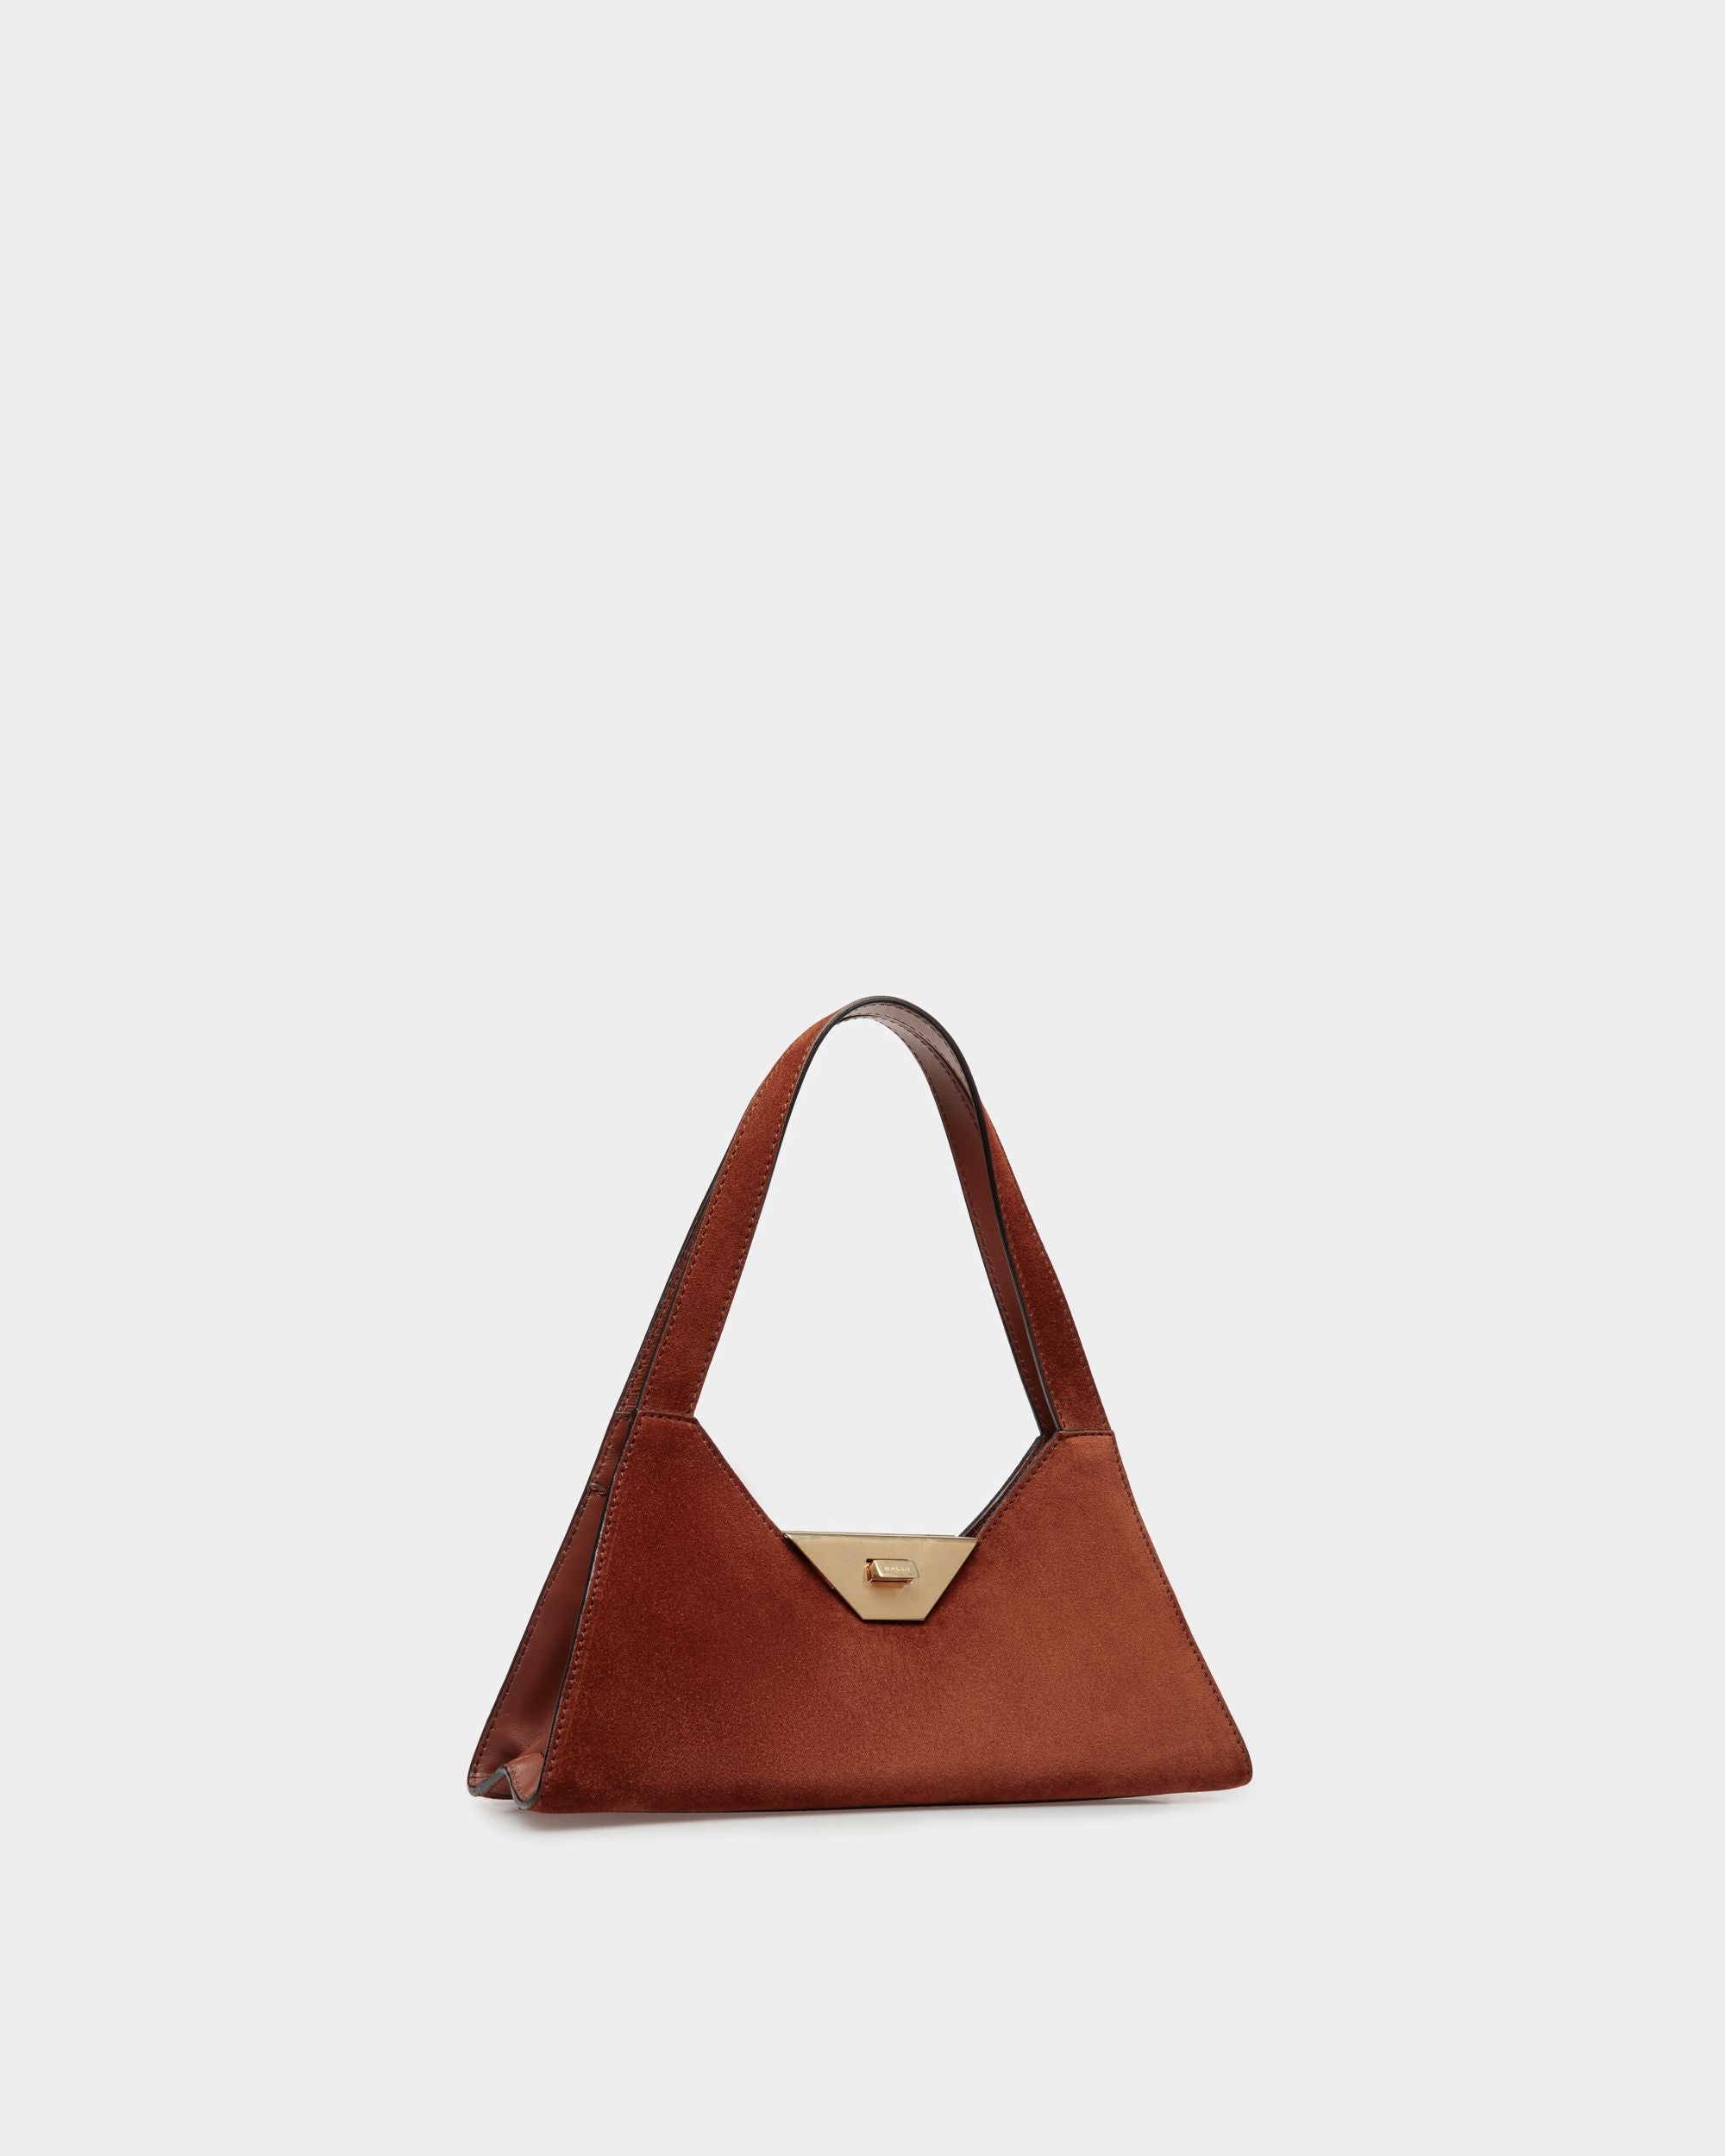 Trilliant Small Shoulder Bag | Women's Shoulder Bag | Brown Suede Leather | Bally | Still Life 3/4 Front